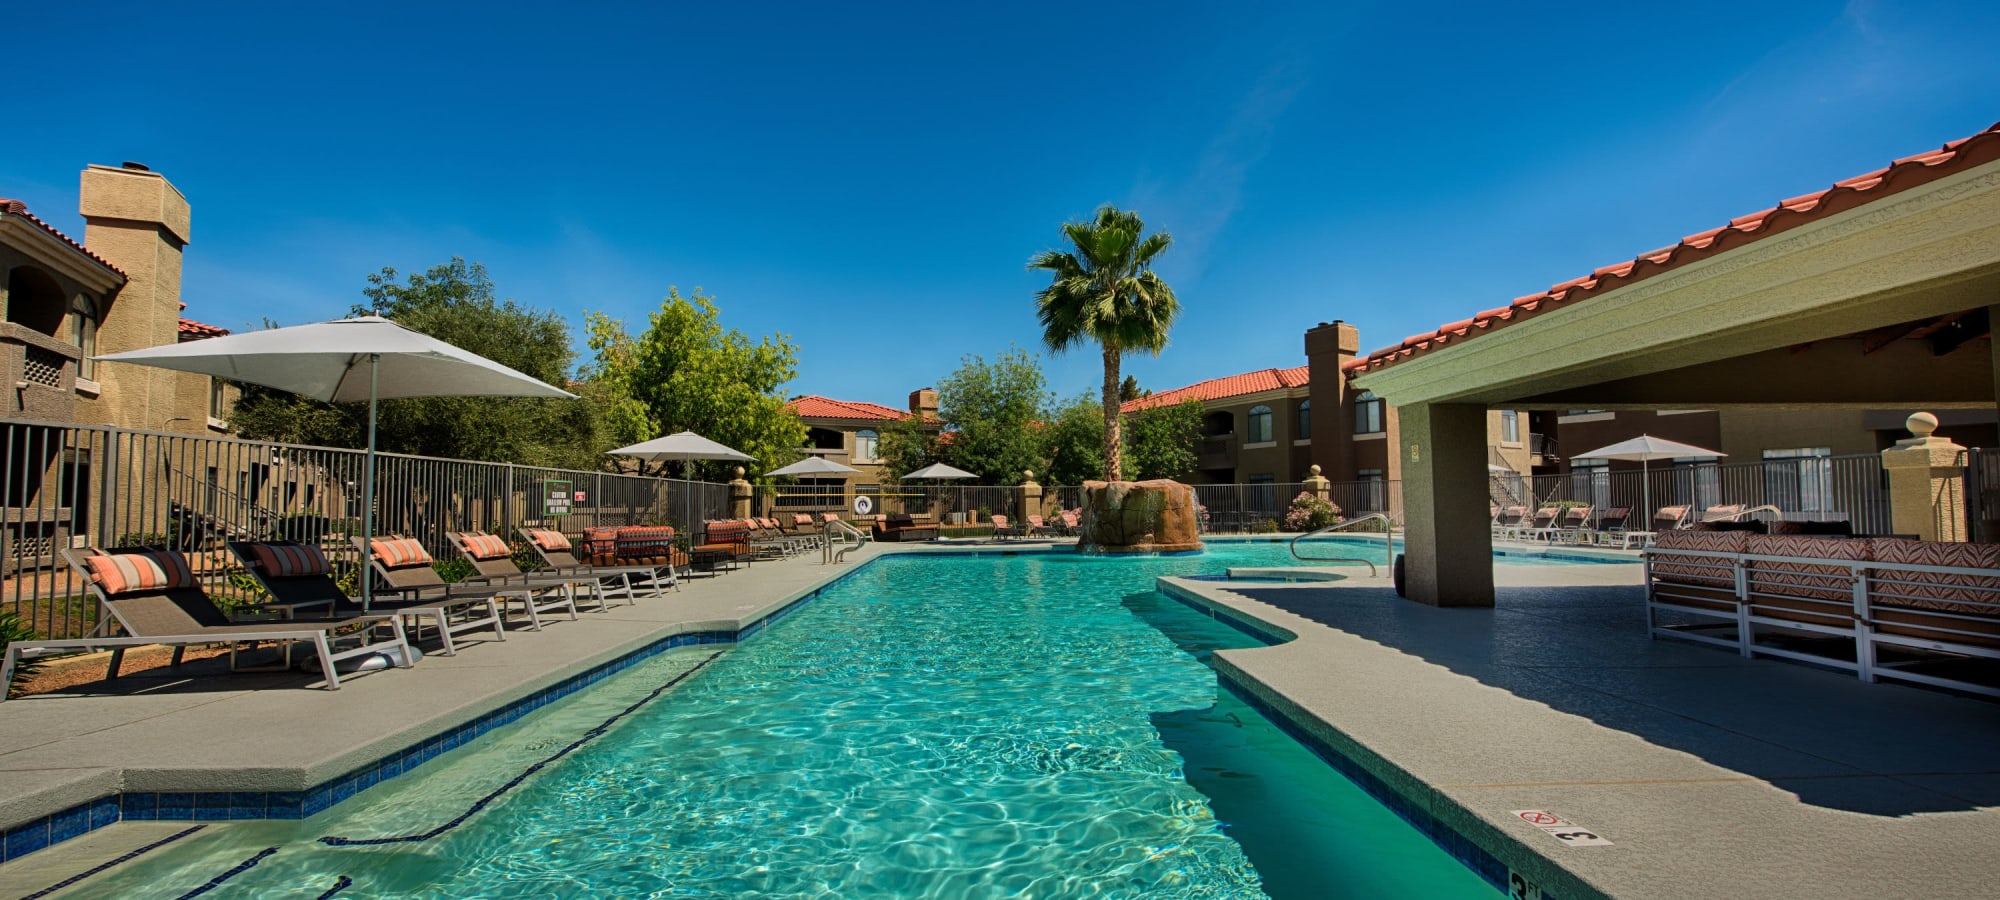 Large swimming pool at The Ventura in Chandler, Arizona